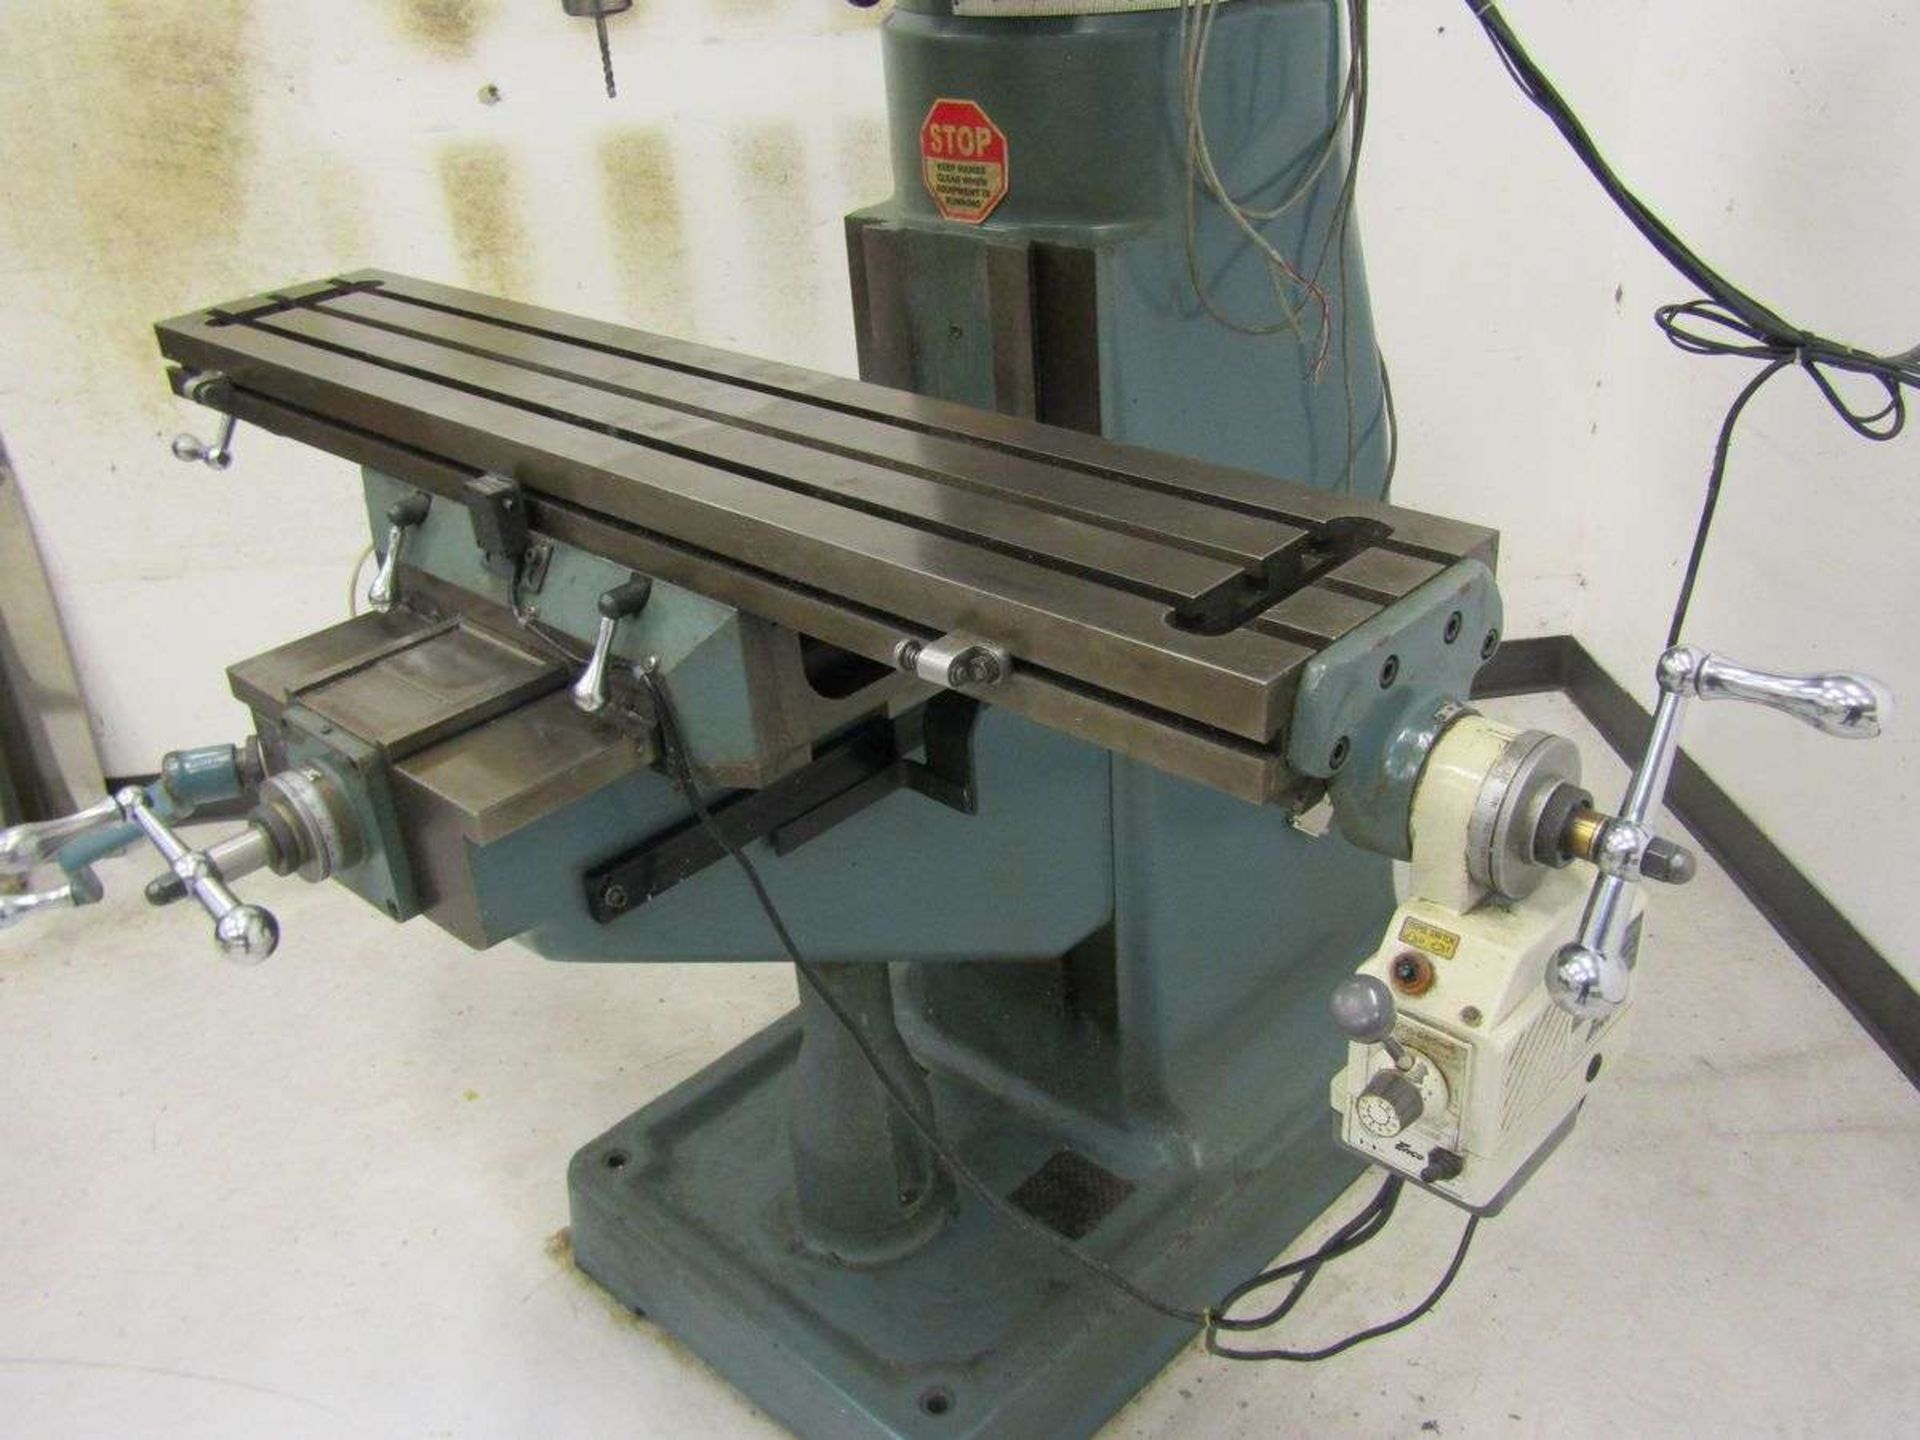 1996 Enco 100-1597 Vertical Milling Machine - Image 4 of 8